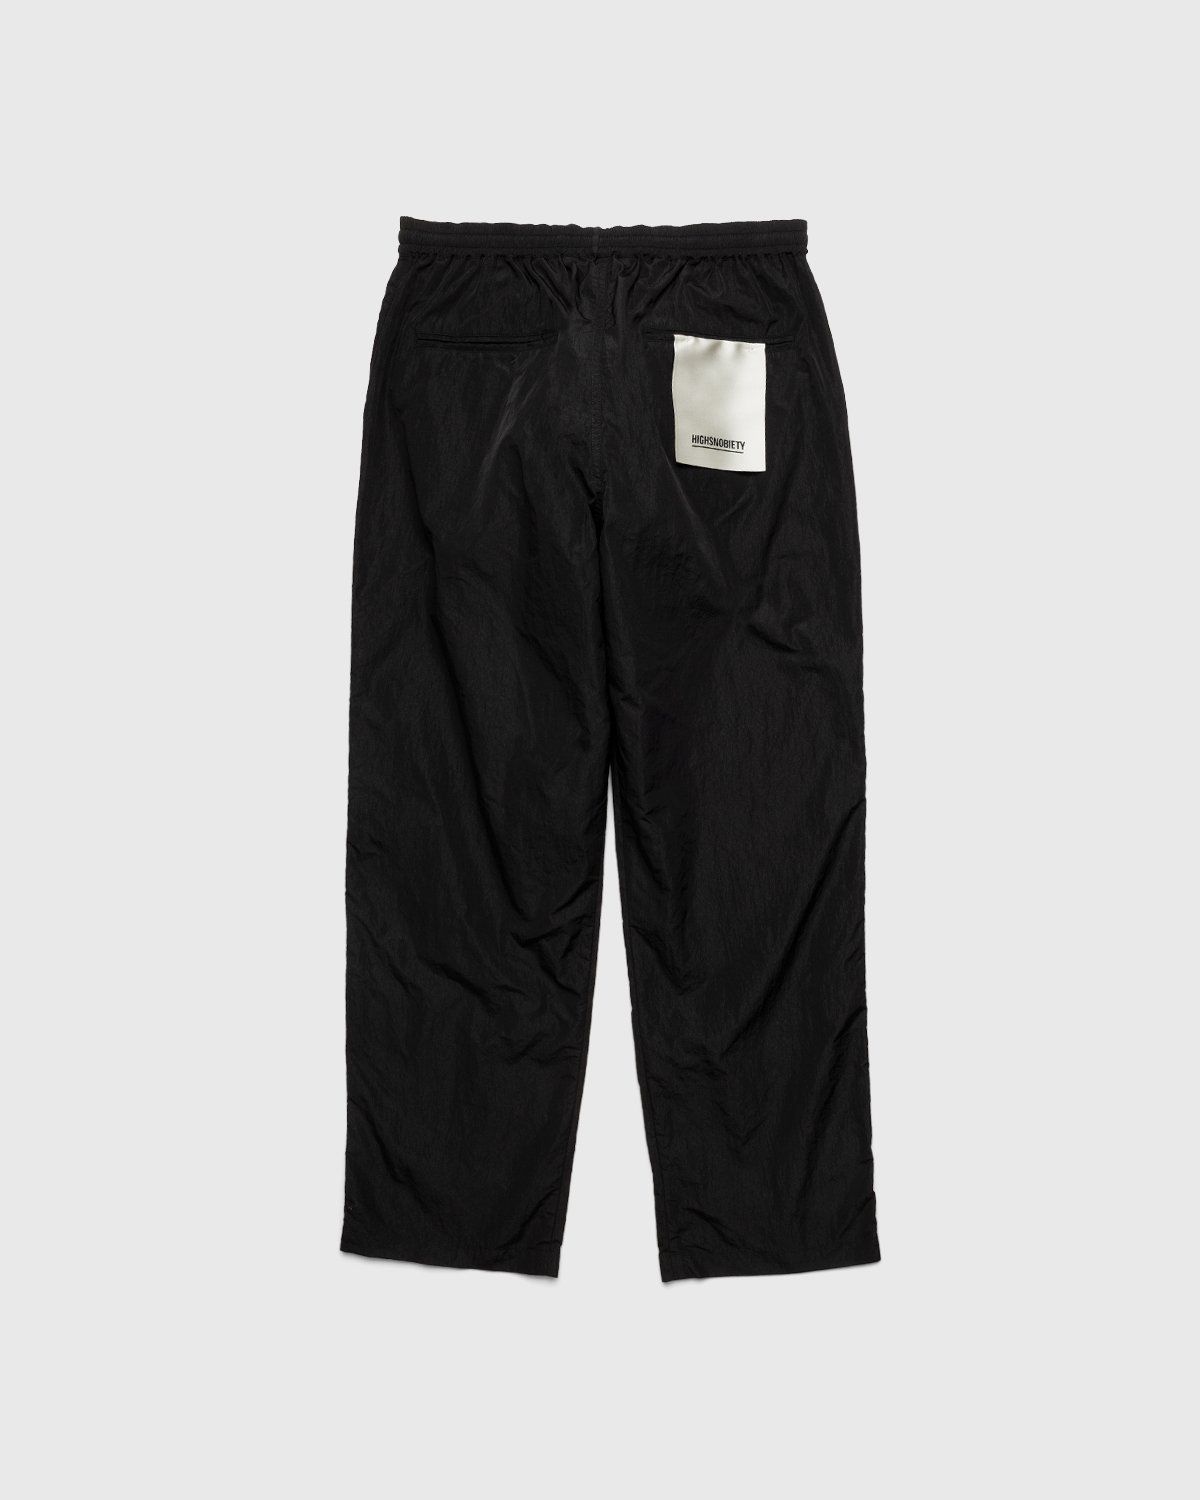 Highsnobiety – Crepe Nylon Elastic Pants Black - Active Pants - Black - Image 2